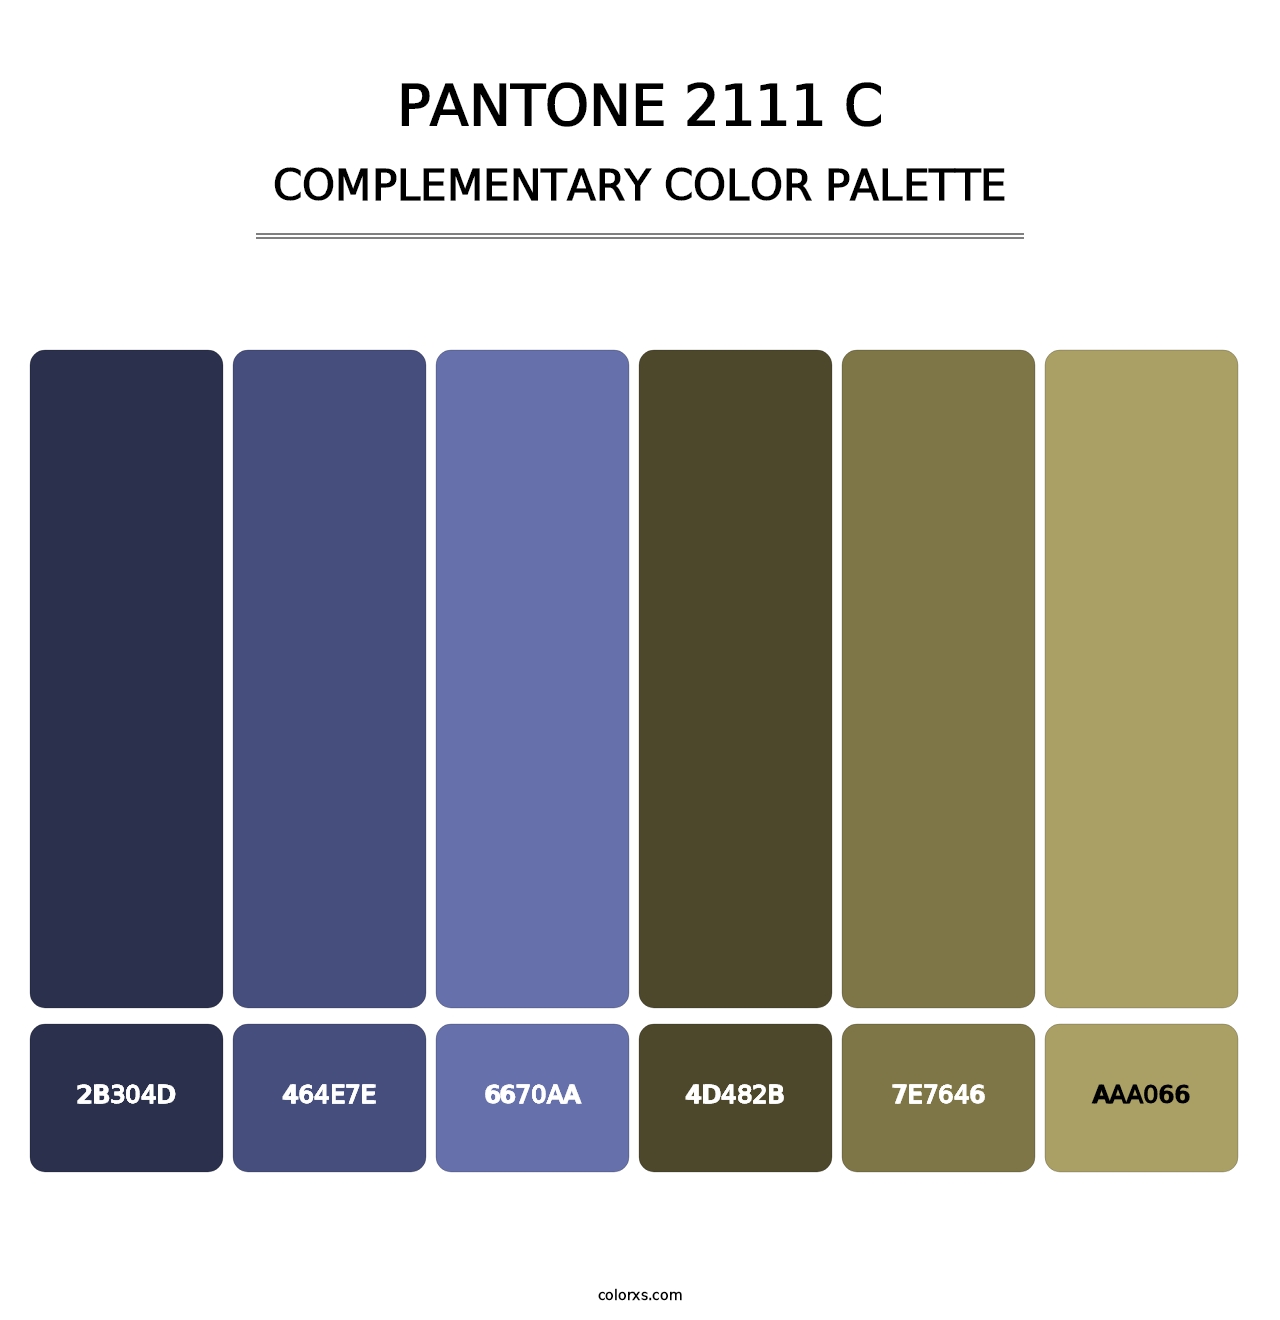 PANTONE 2111 C - Complementary Color Palette